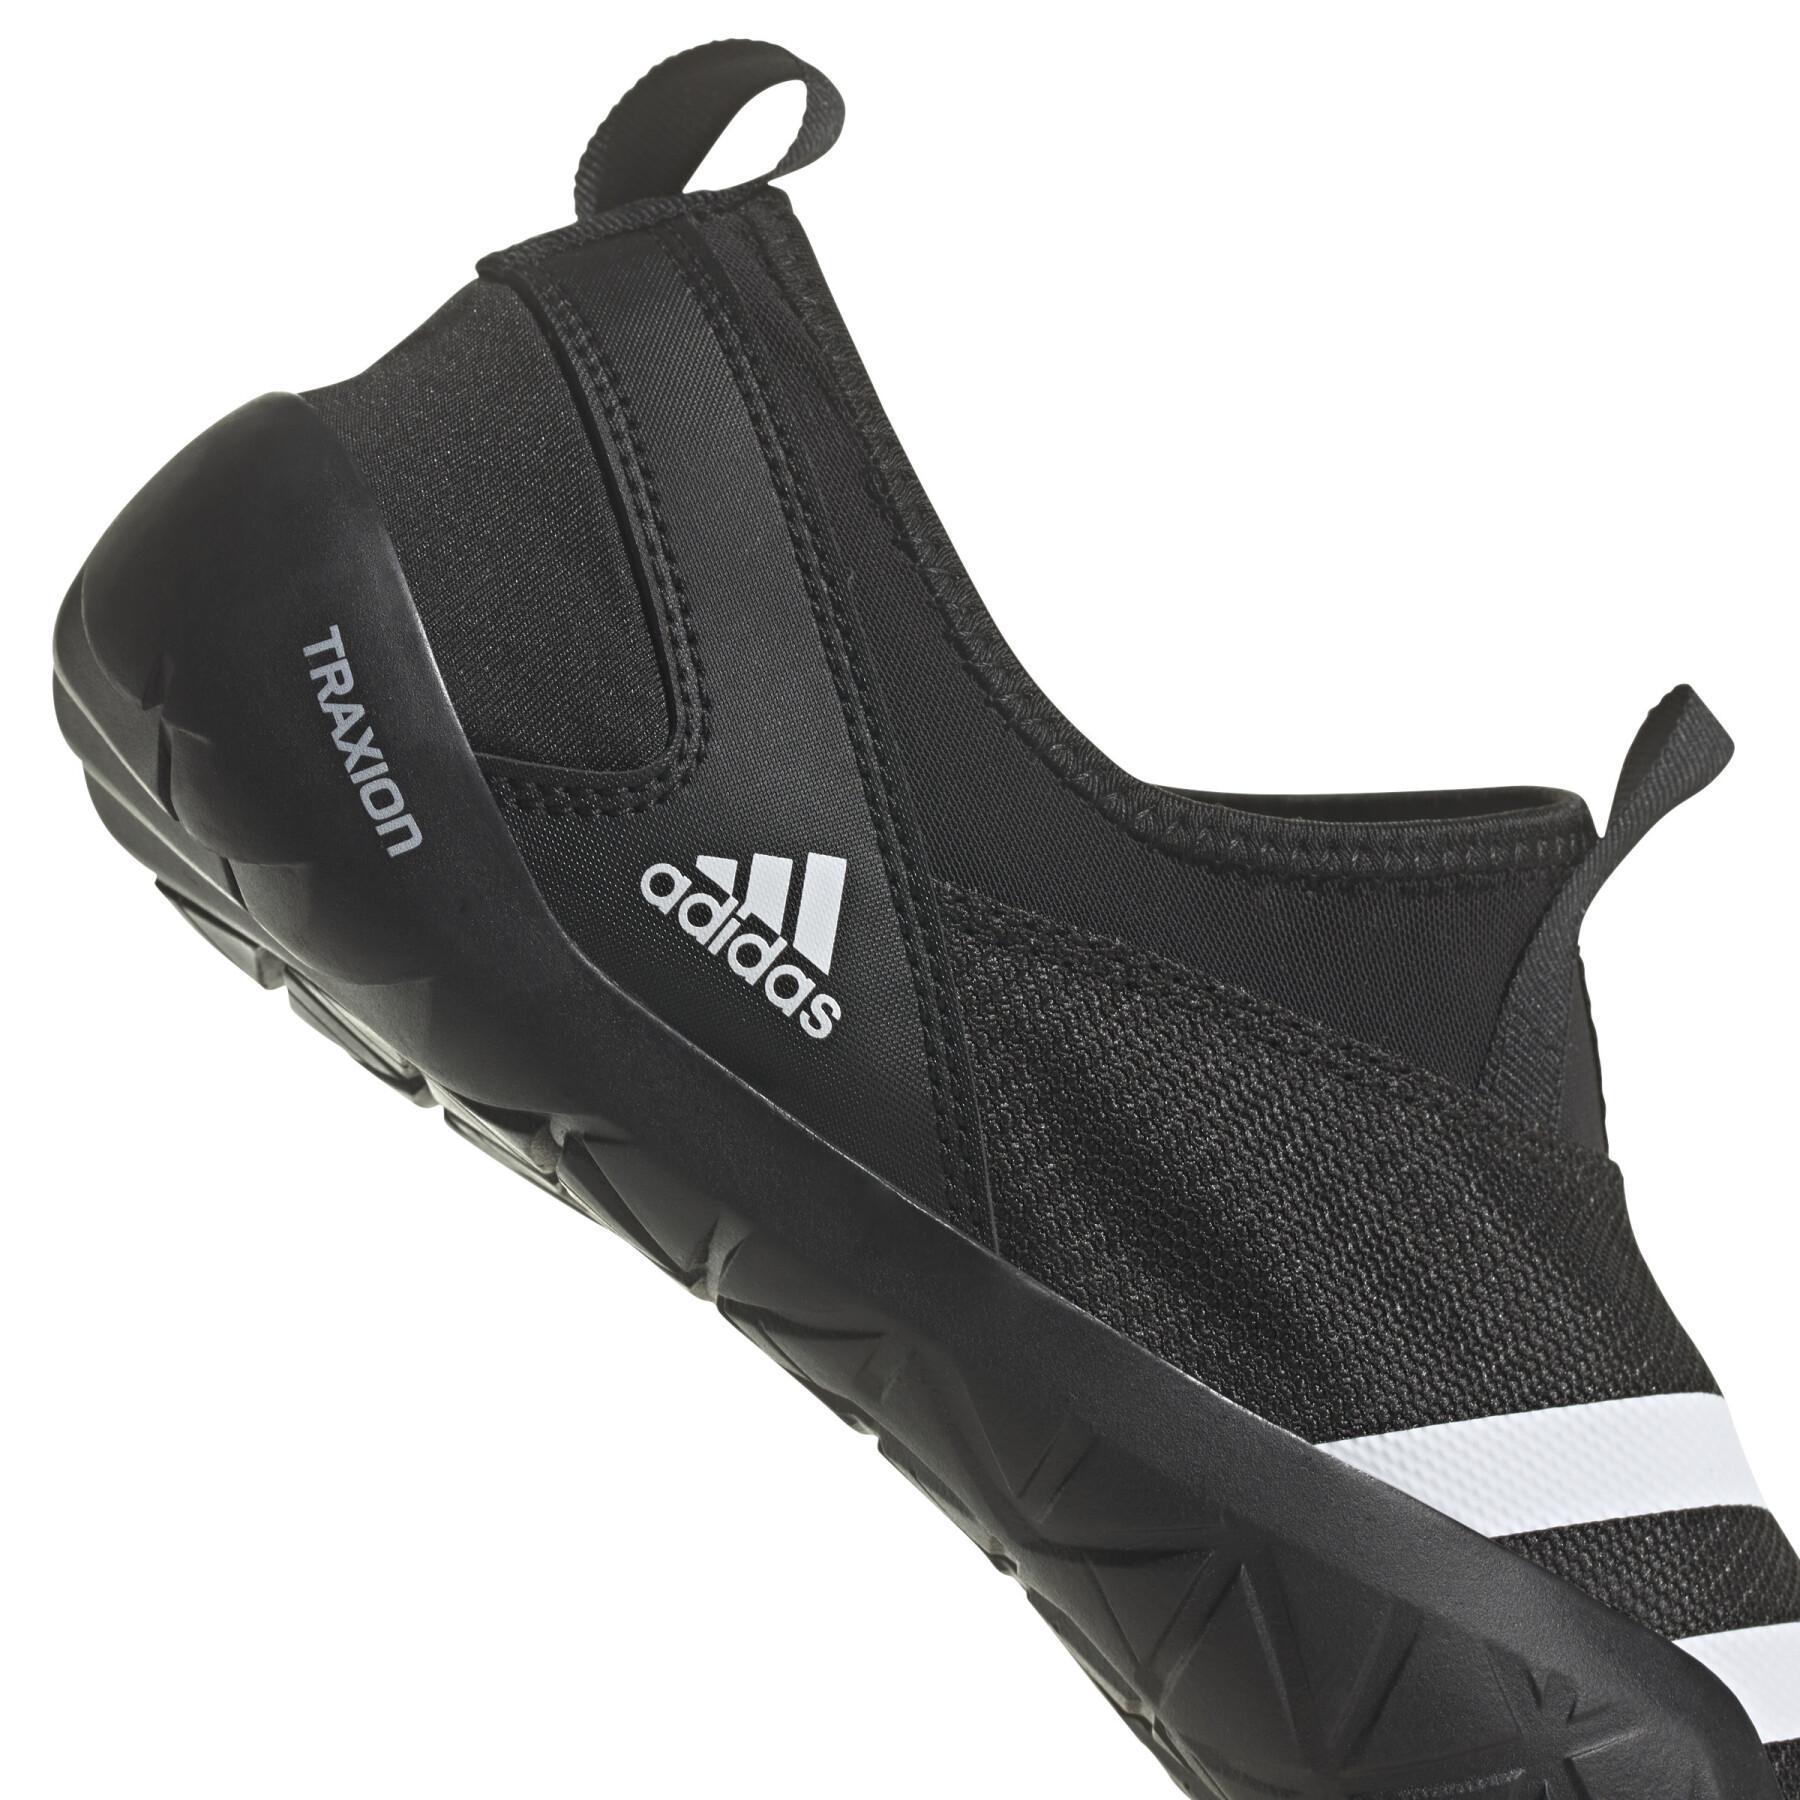 Aquatic shoes adidas Terrex Jawpaw Slip-On HEAT.RDY